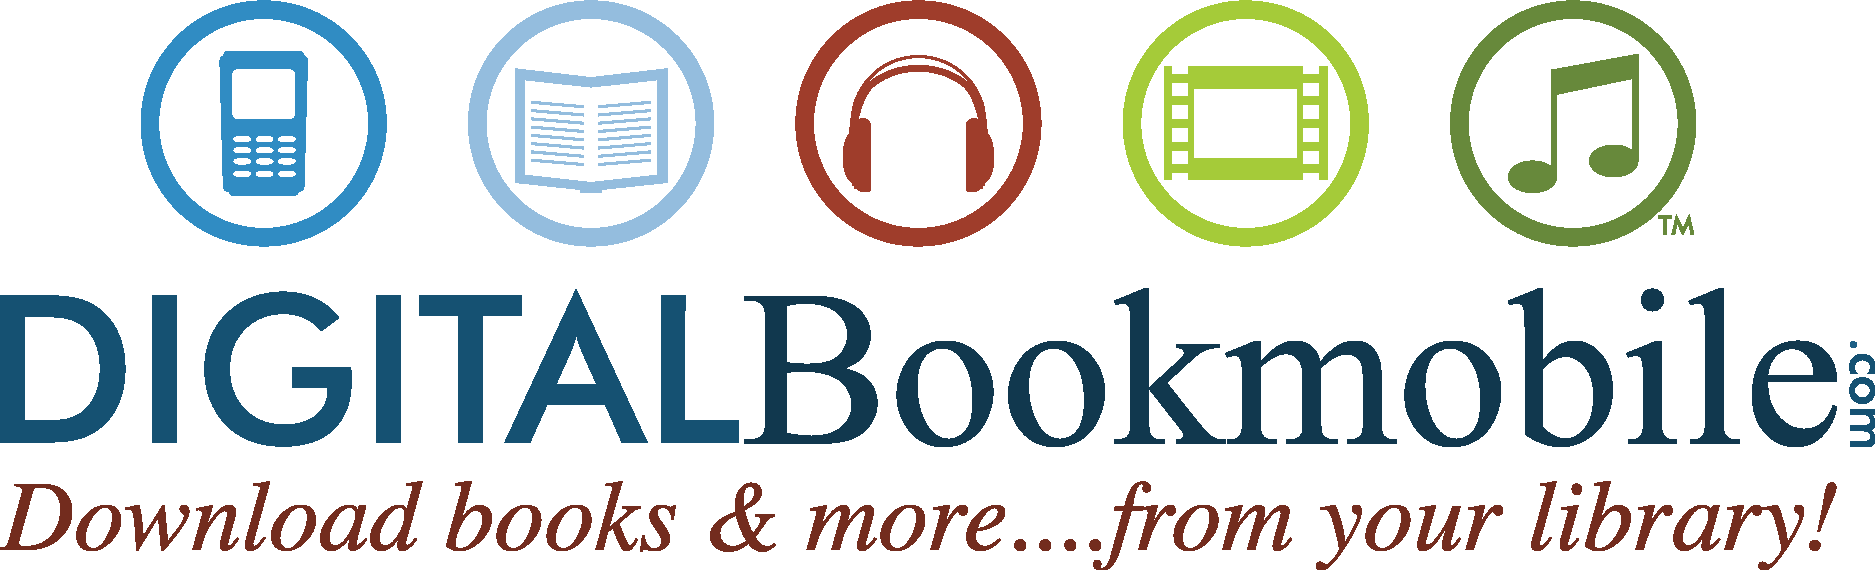 Digital Bookmobile Logo Vector